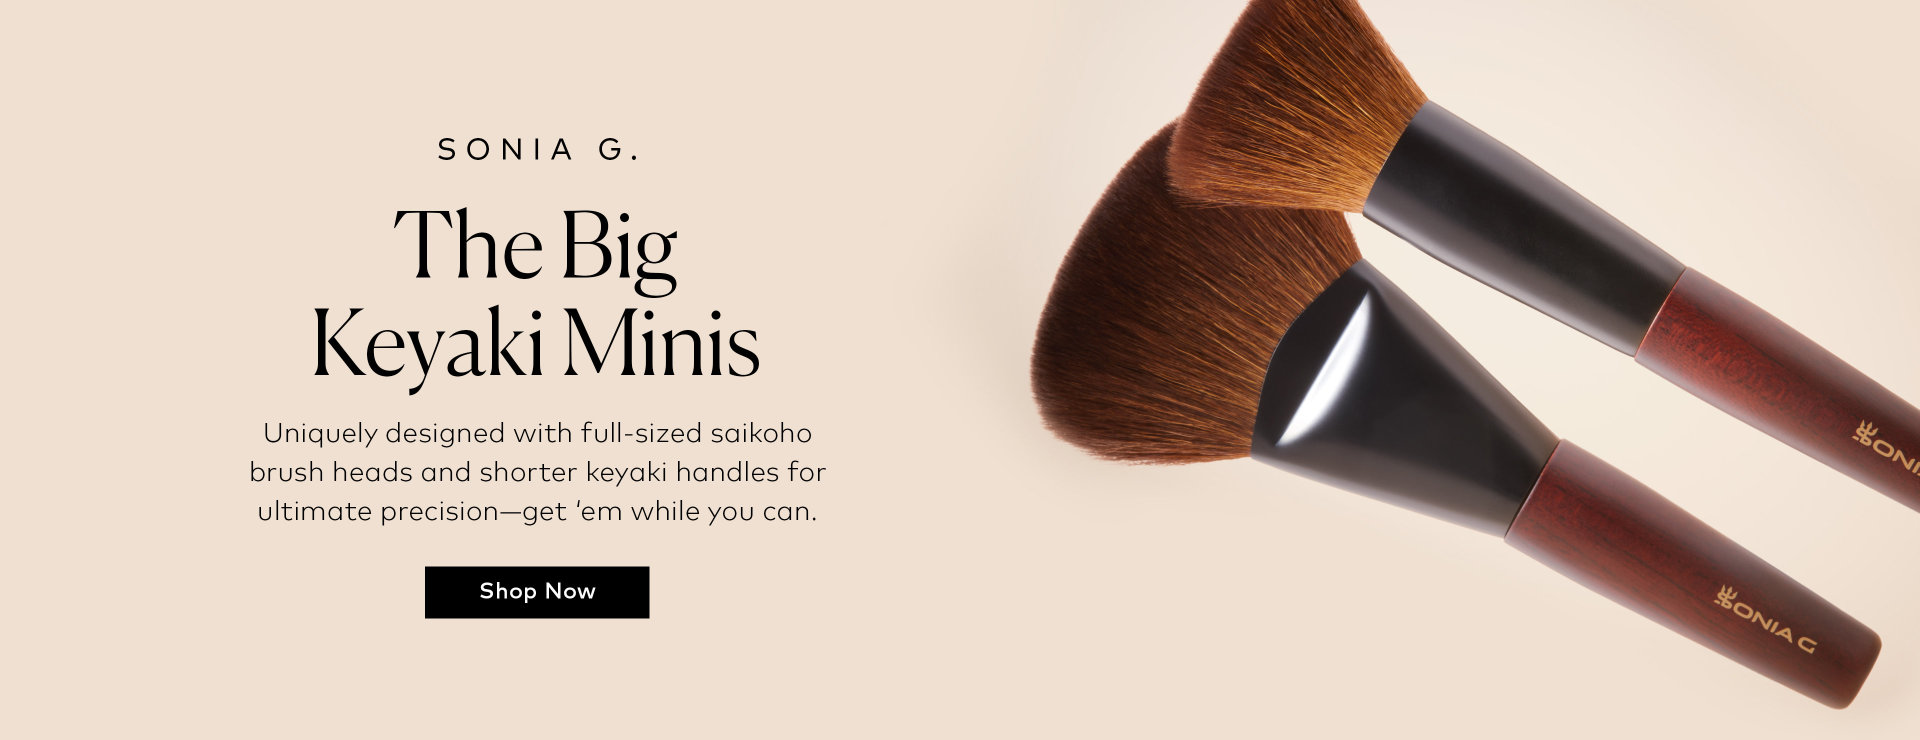 Shop the new Sonia G. Mini Keyaki Niji & Buffer brushes now at Beautylish.com